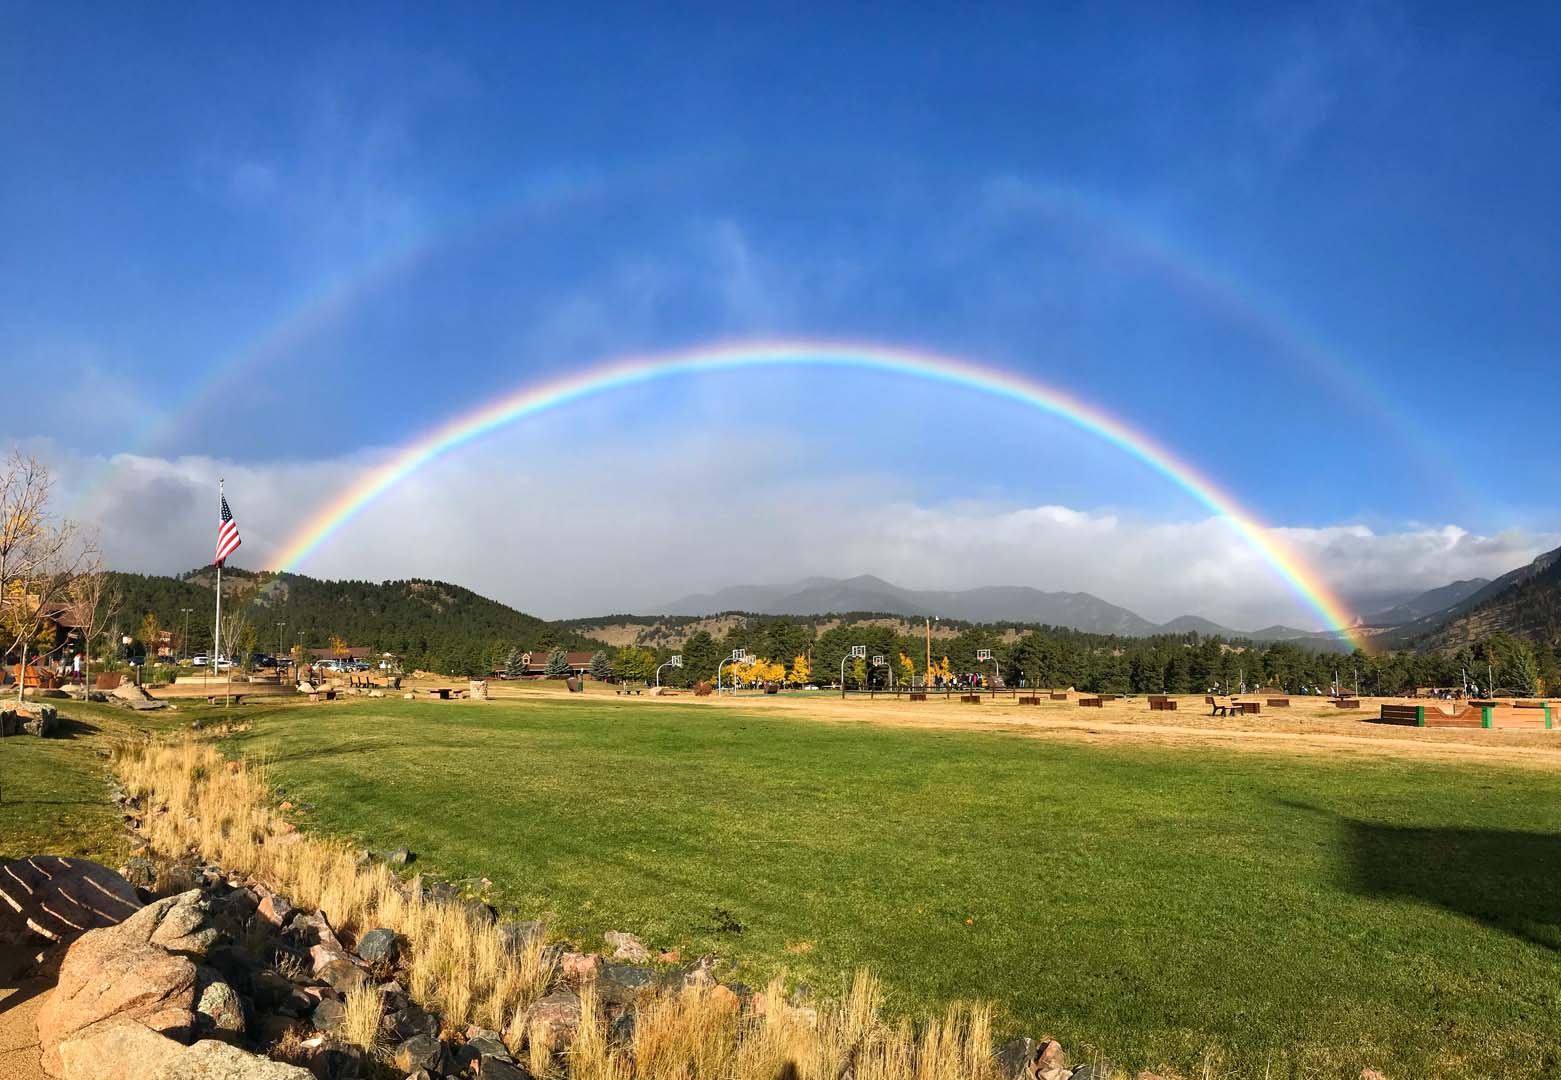 Rainbow over field